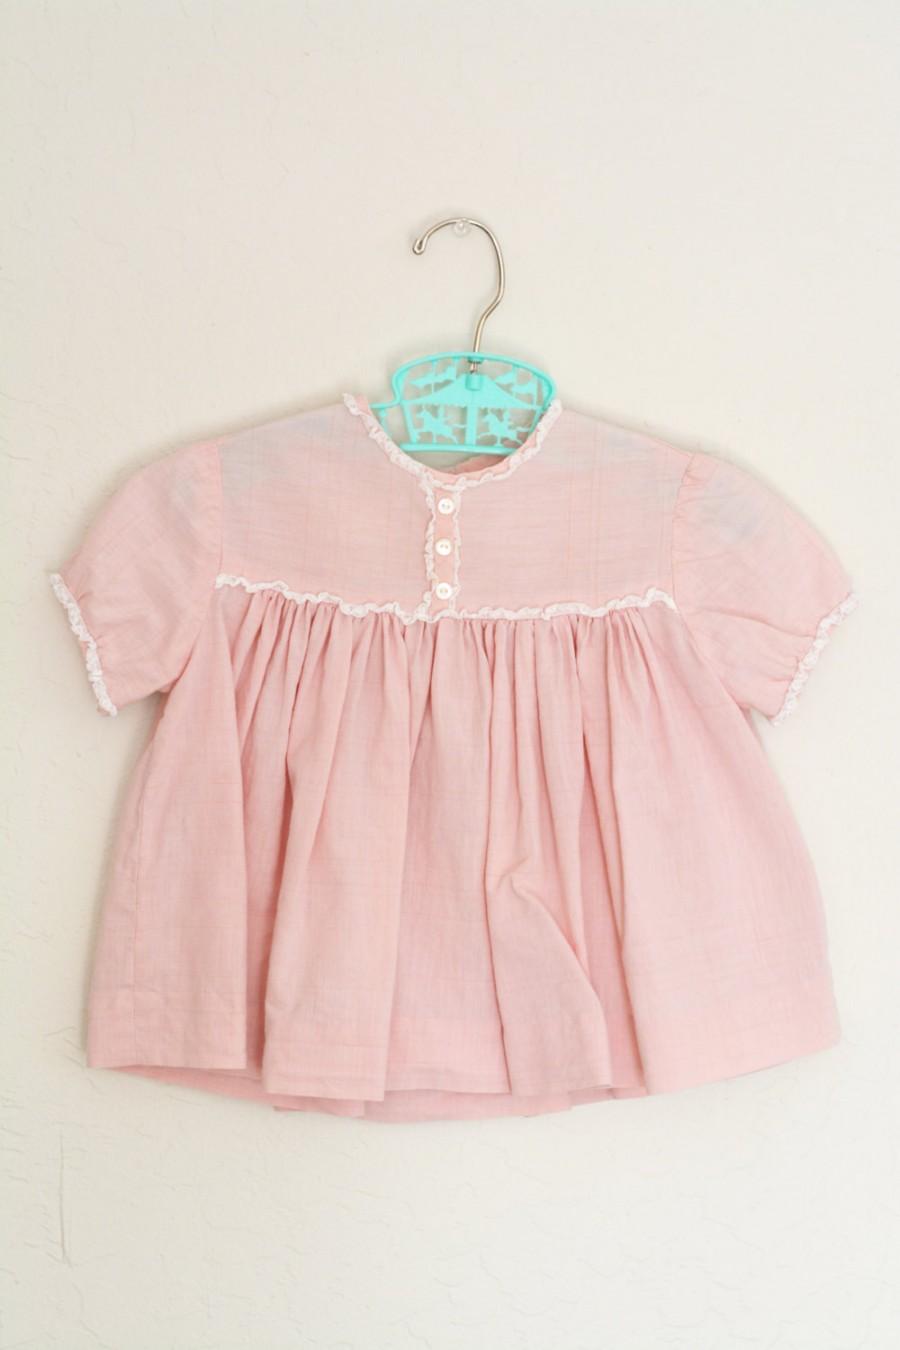 Mariage - Vintage Baby Dress or Swing Top